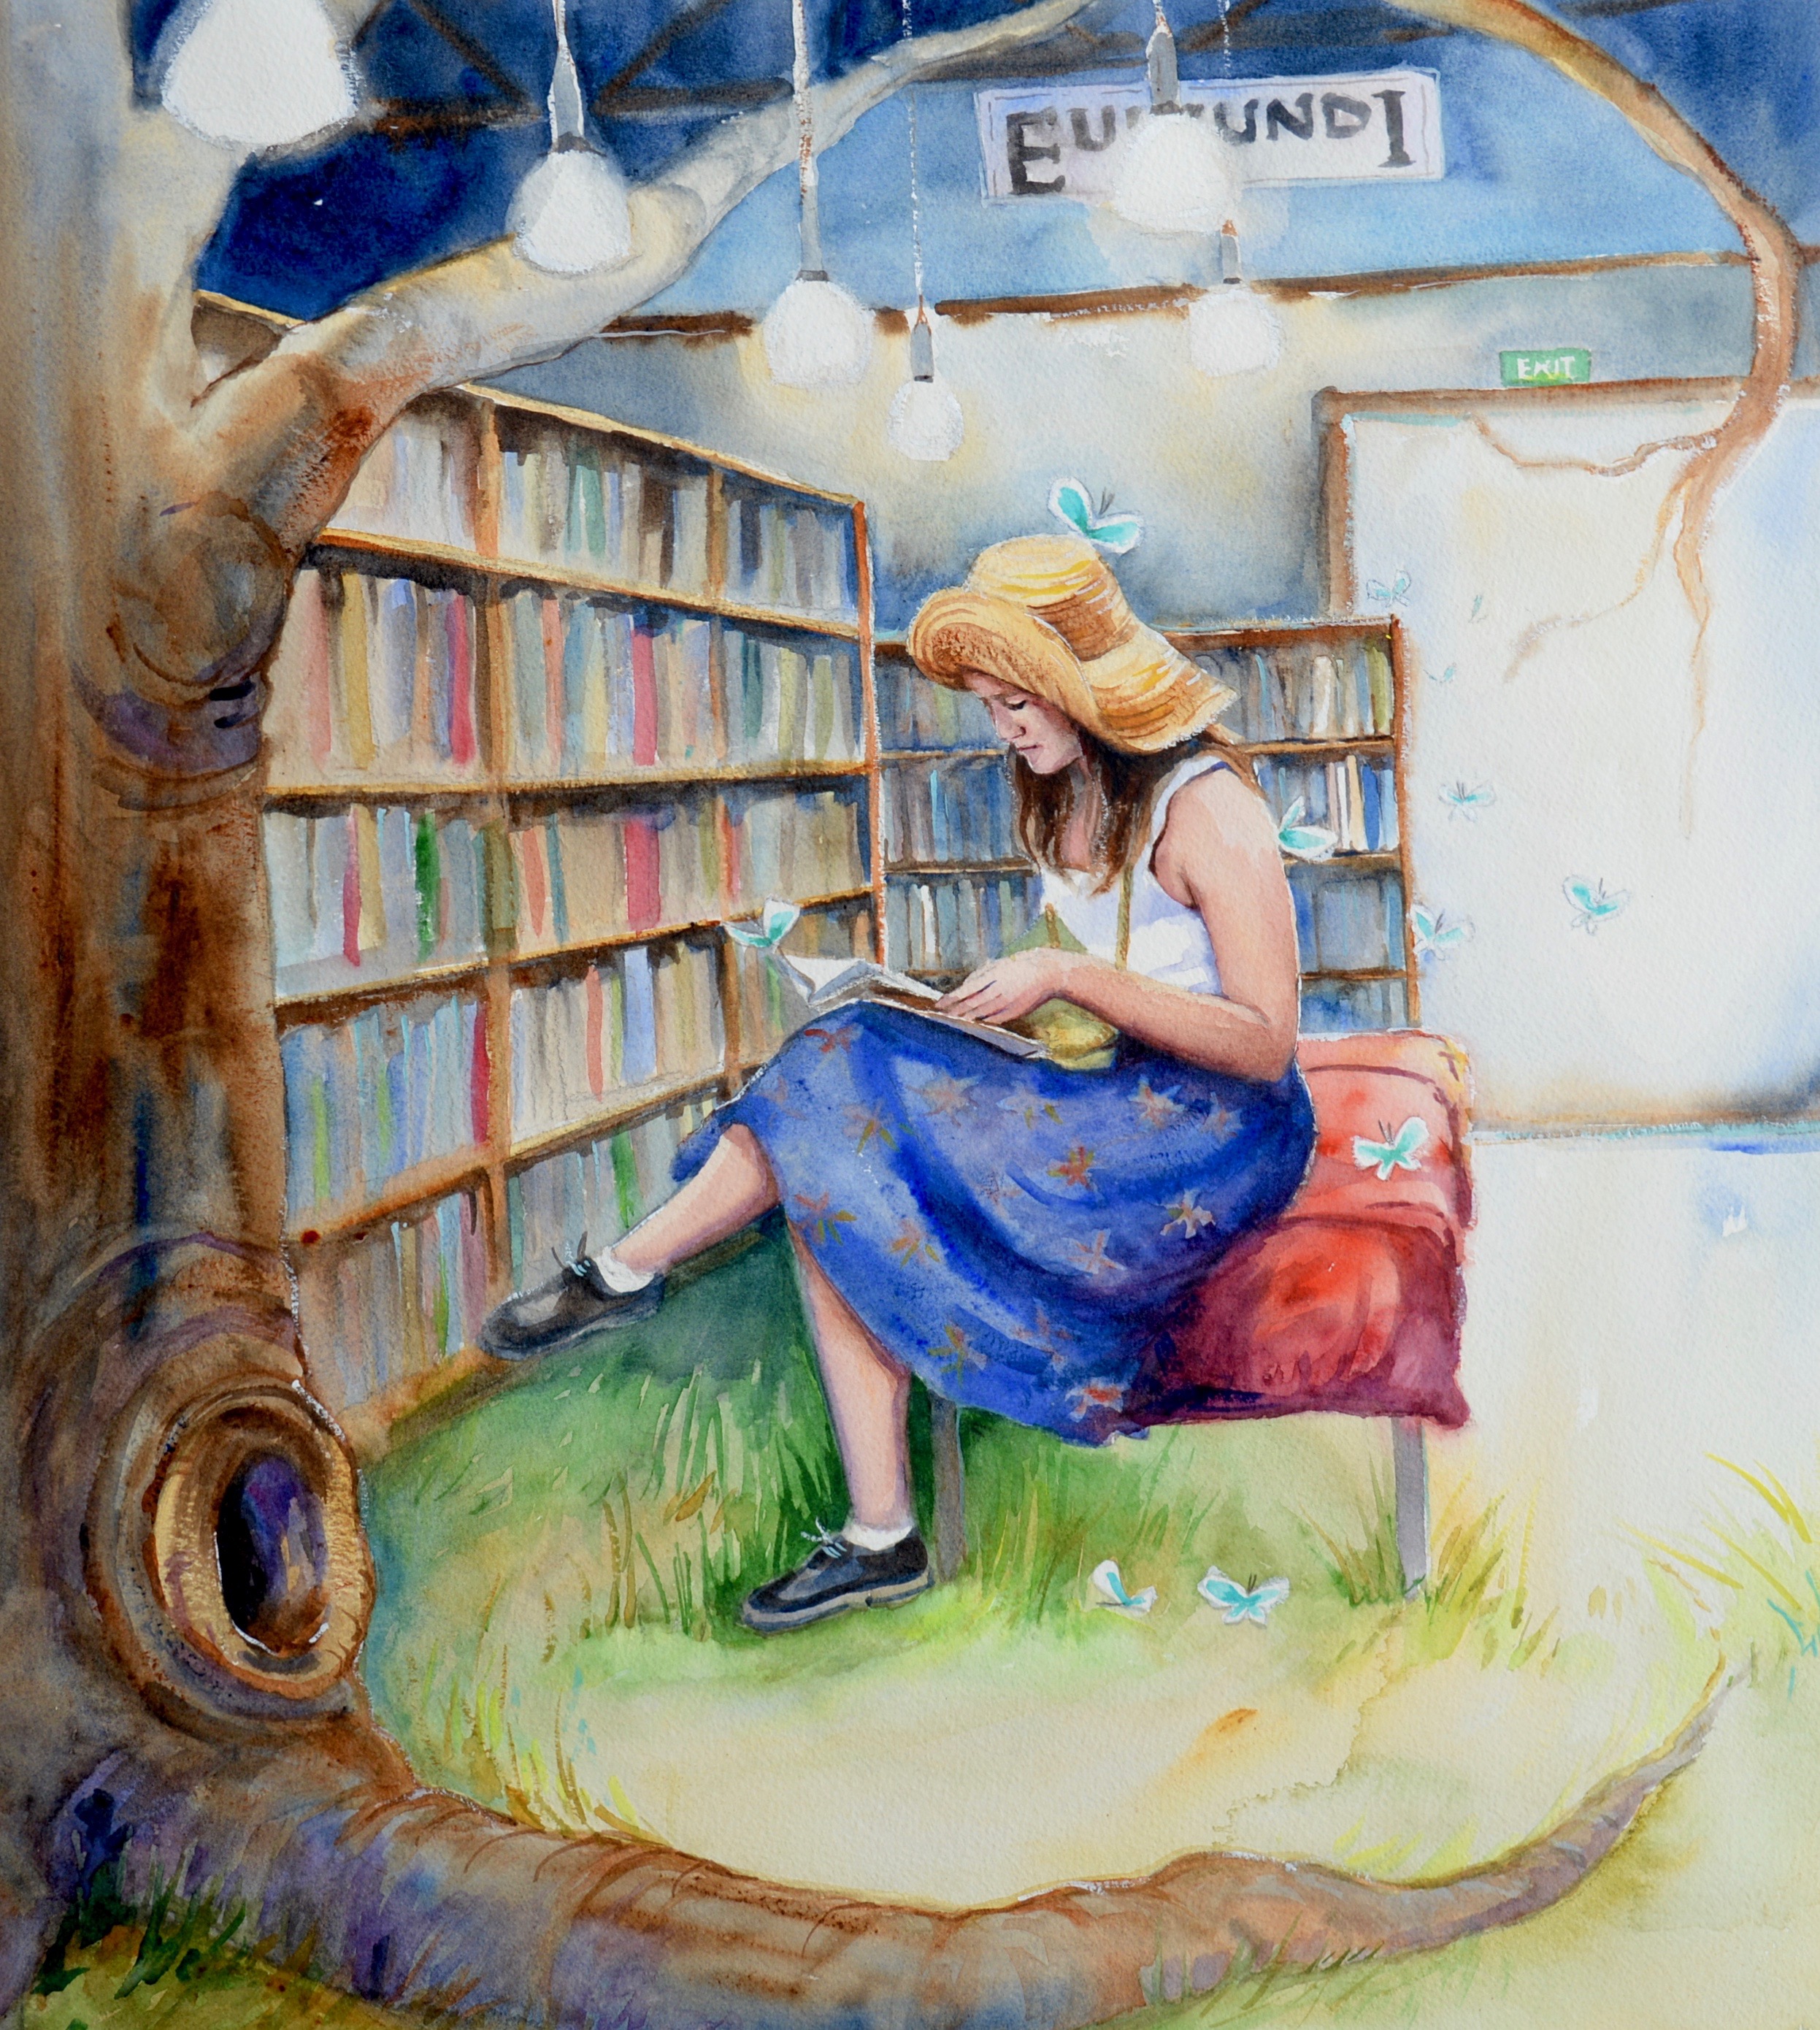 Watercolour, painting, library, reading, bookshop, Eumundi, girl reading, imagination, escape, reading